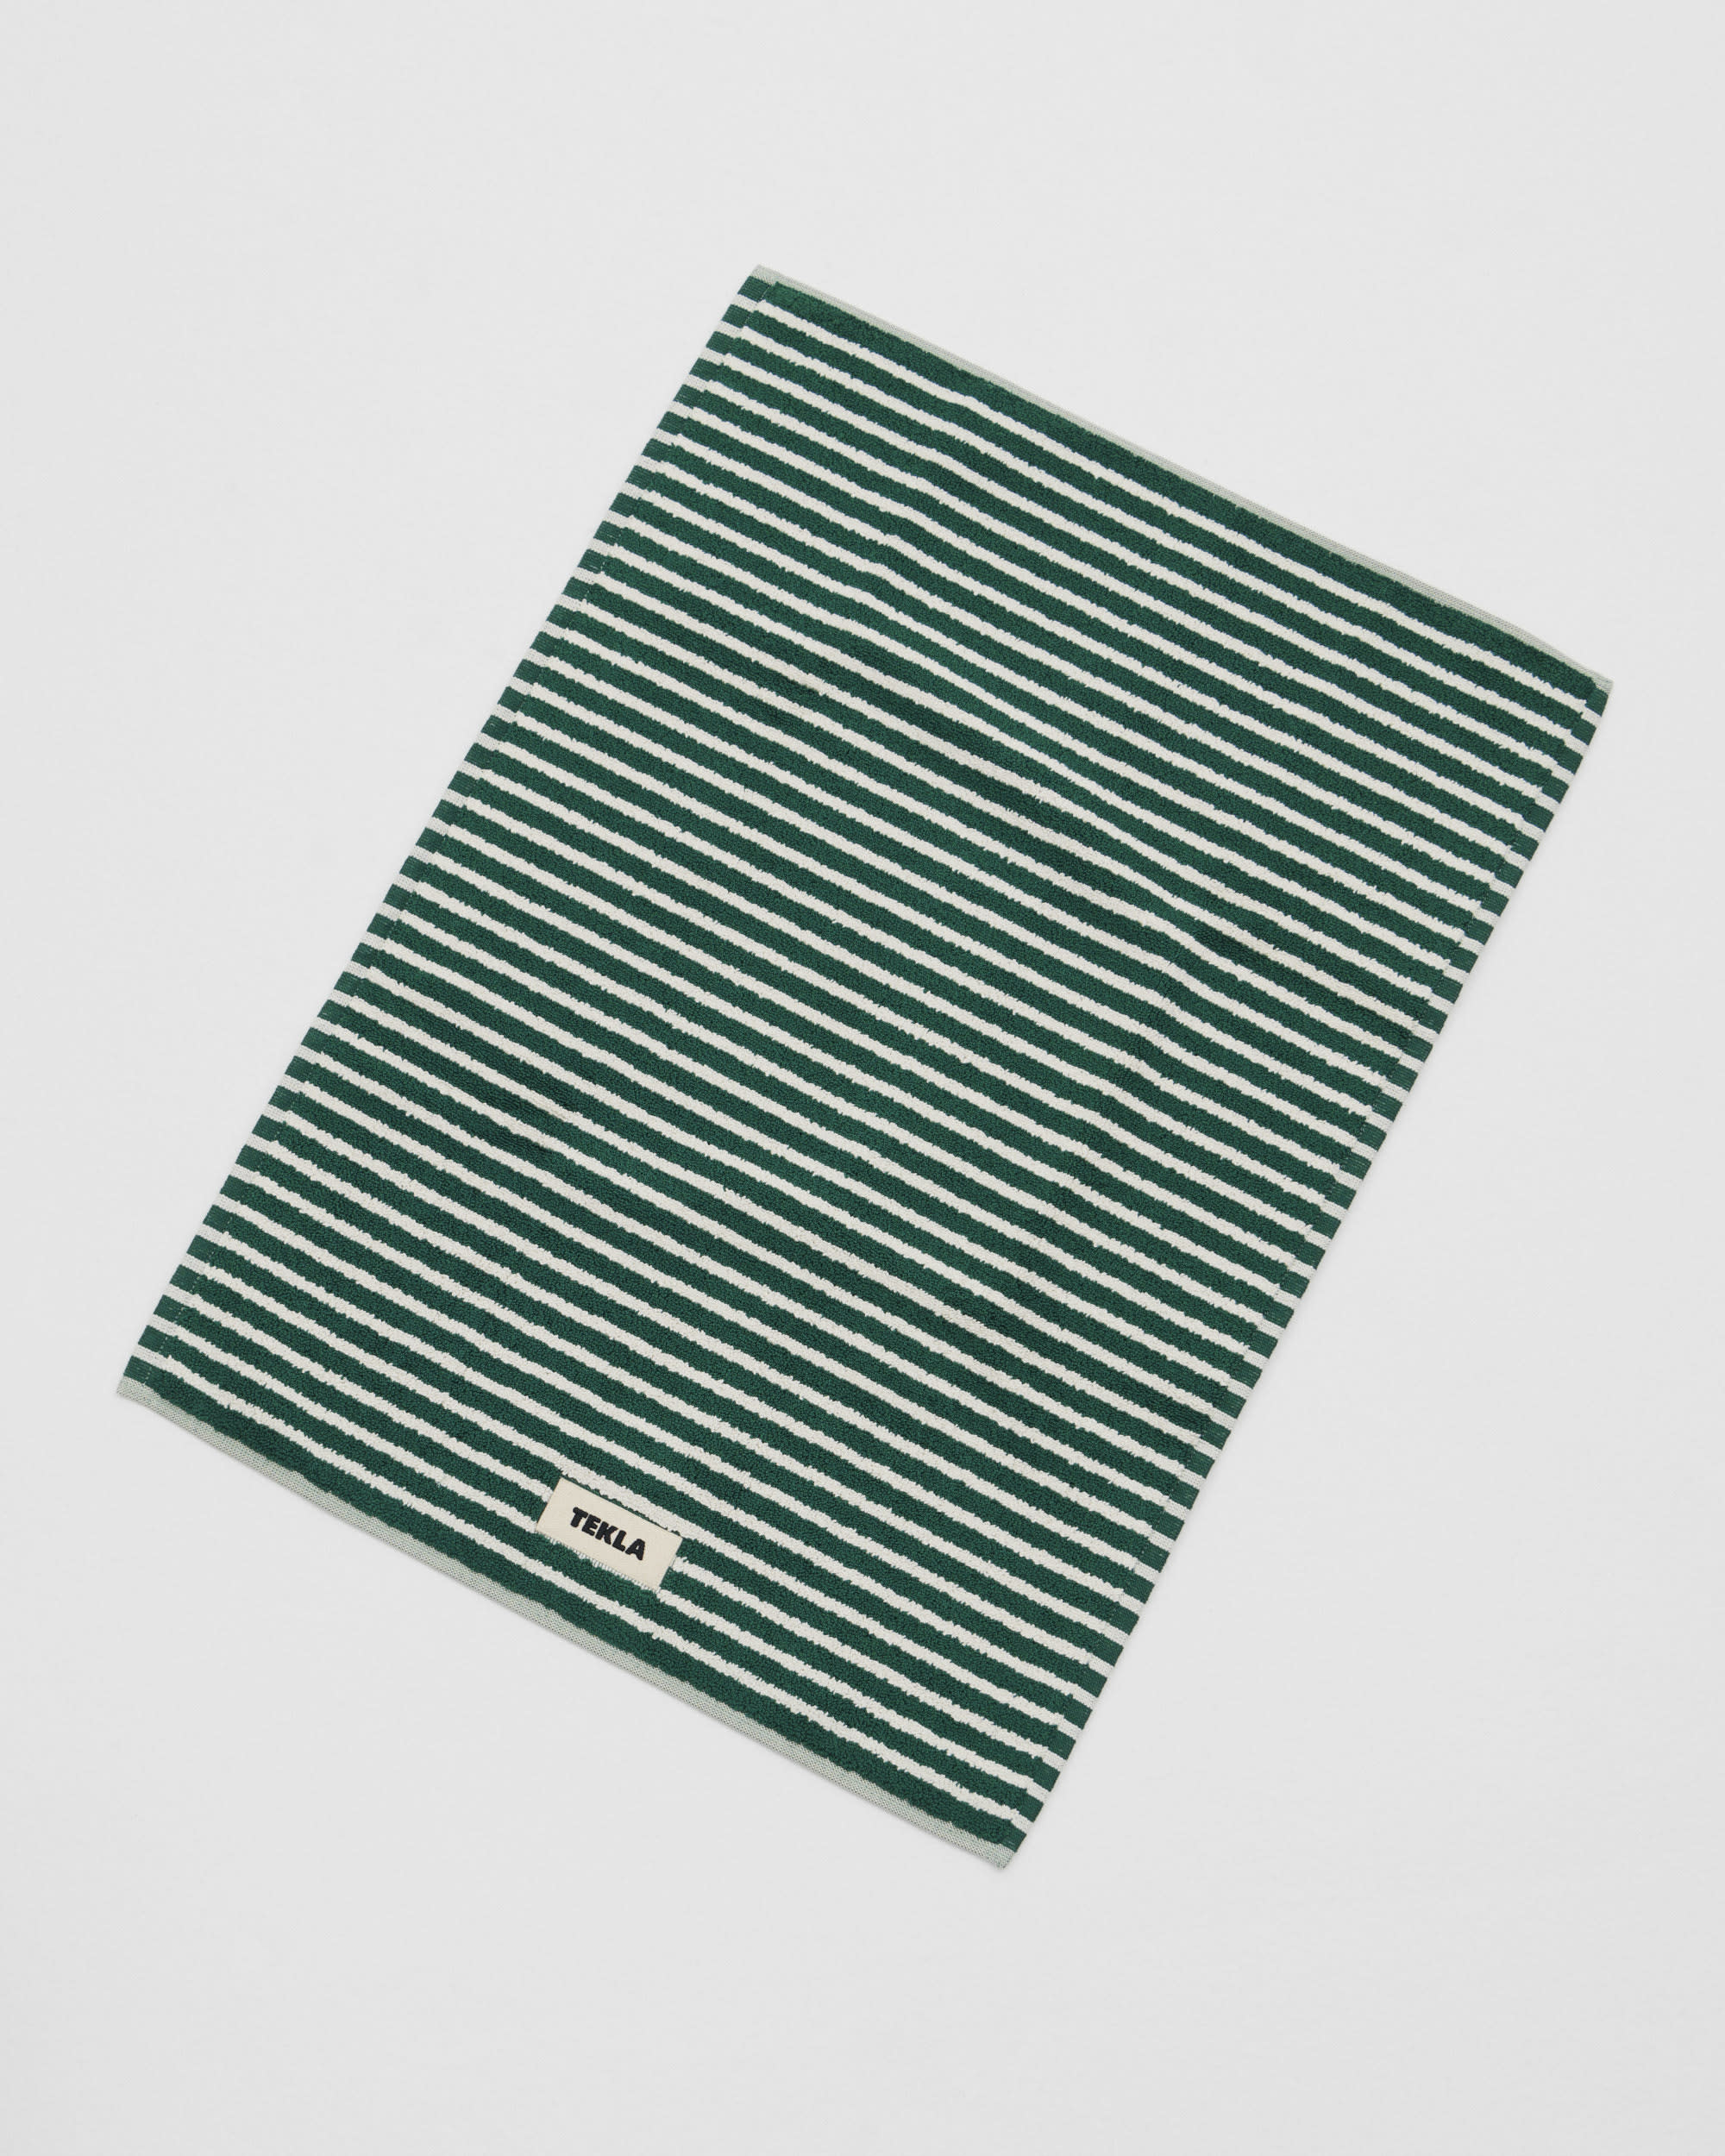 Bath Mat - Striped - Teal Green Stripes